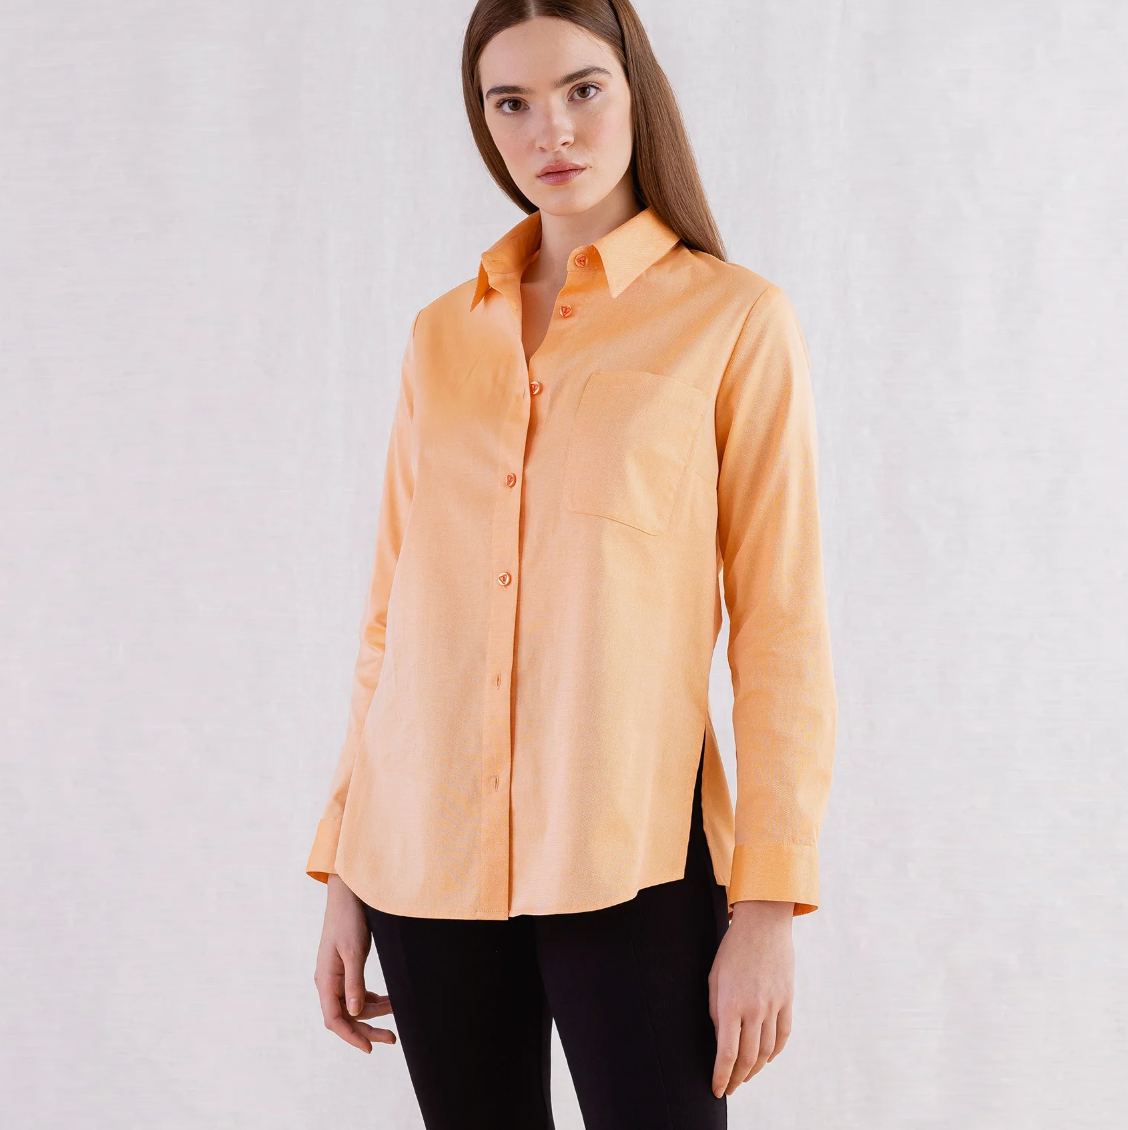 ellie mae marvin button down shirt in sherbert - size medium